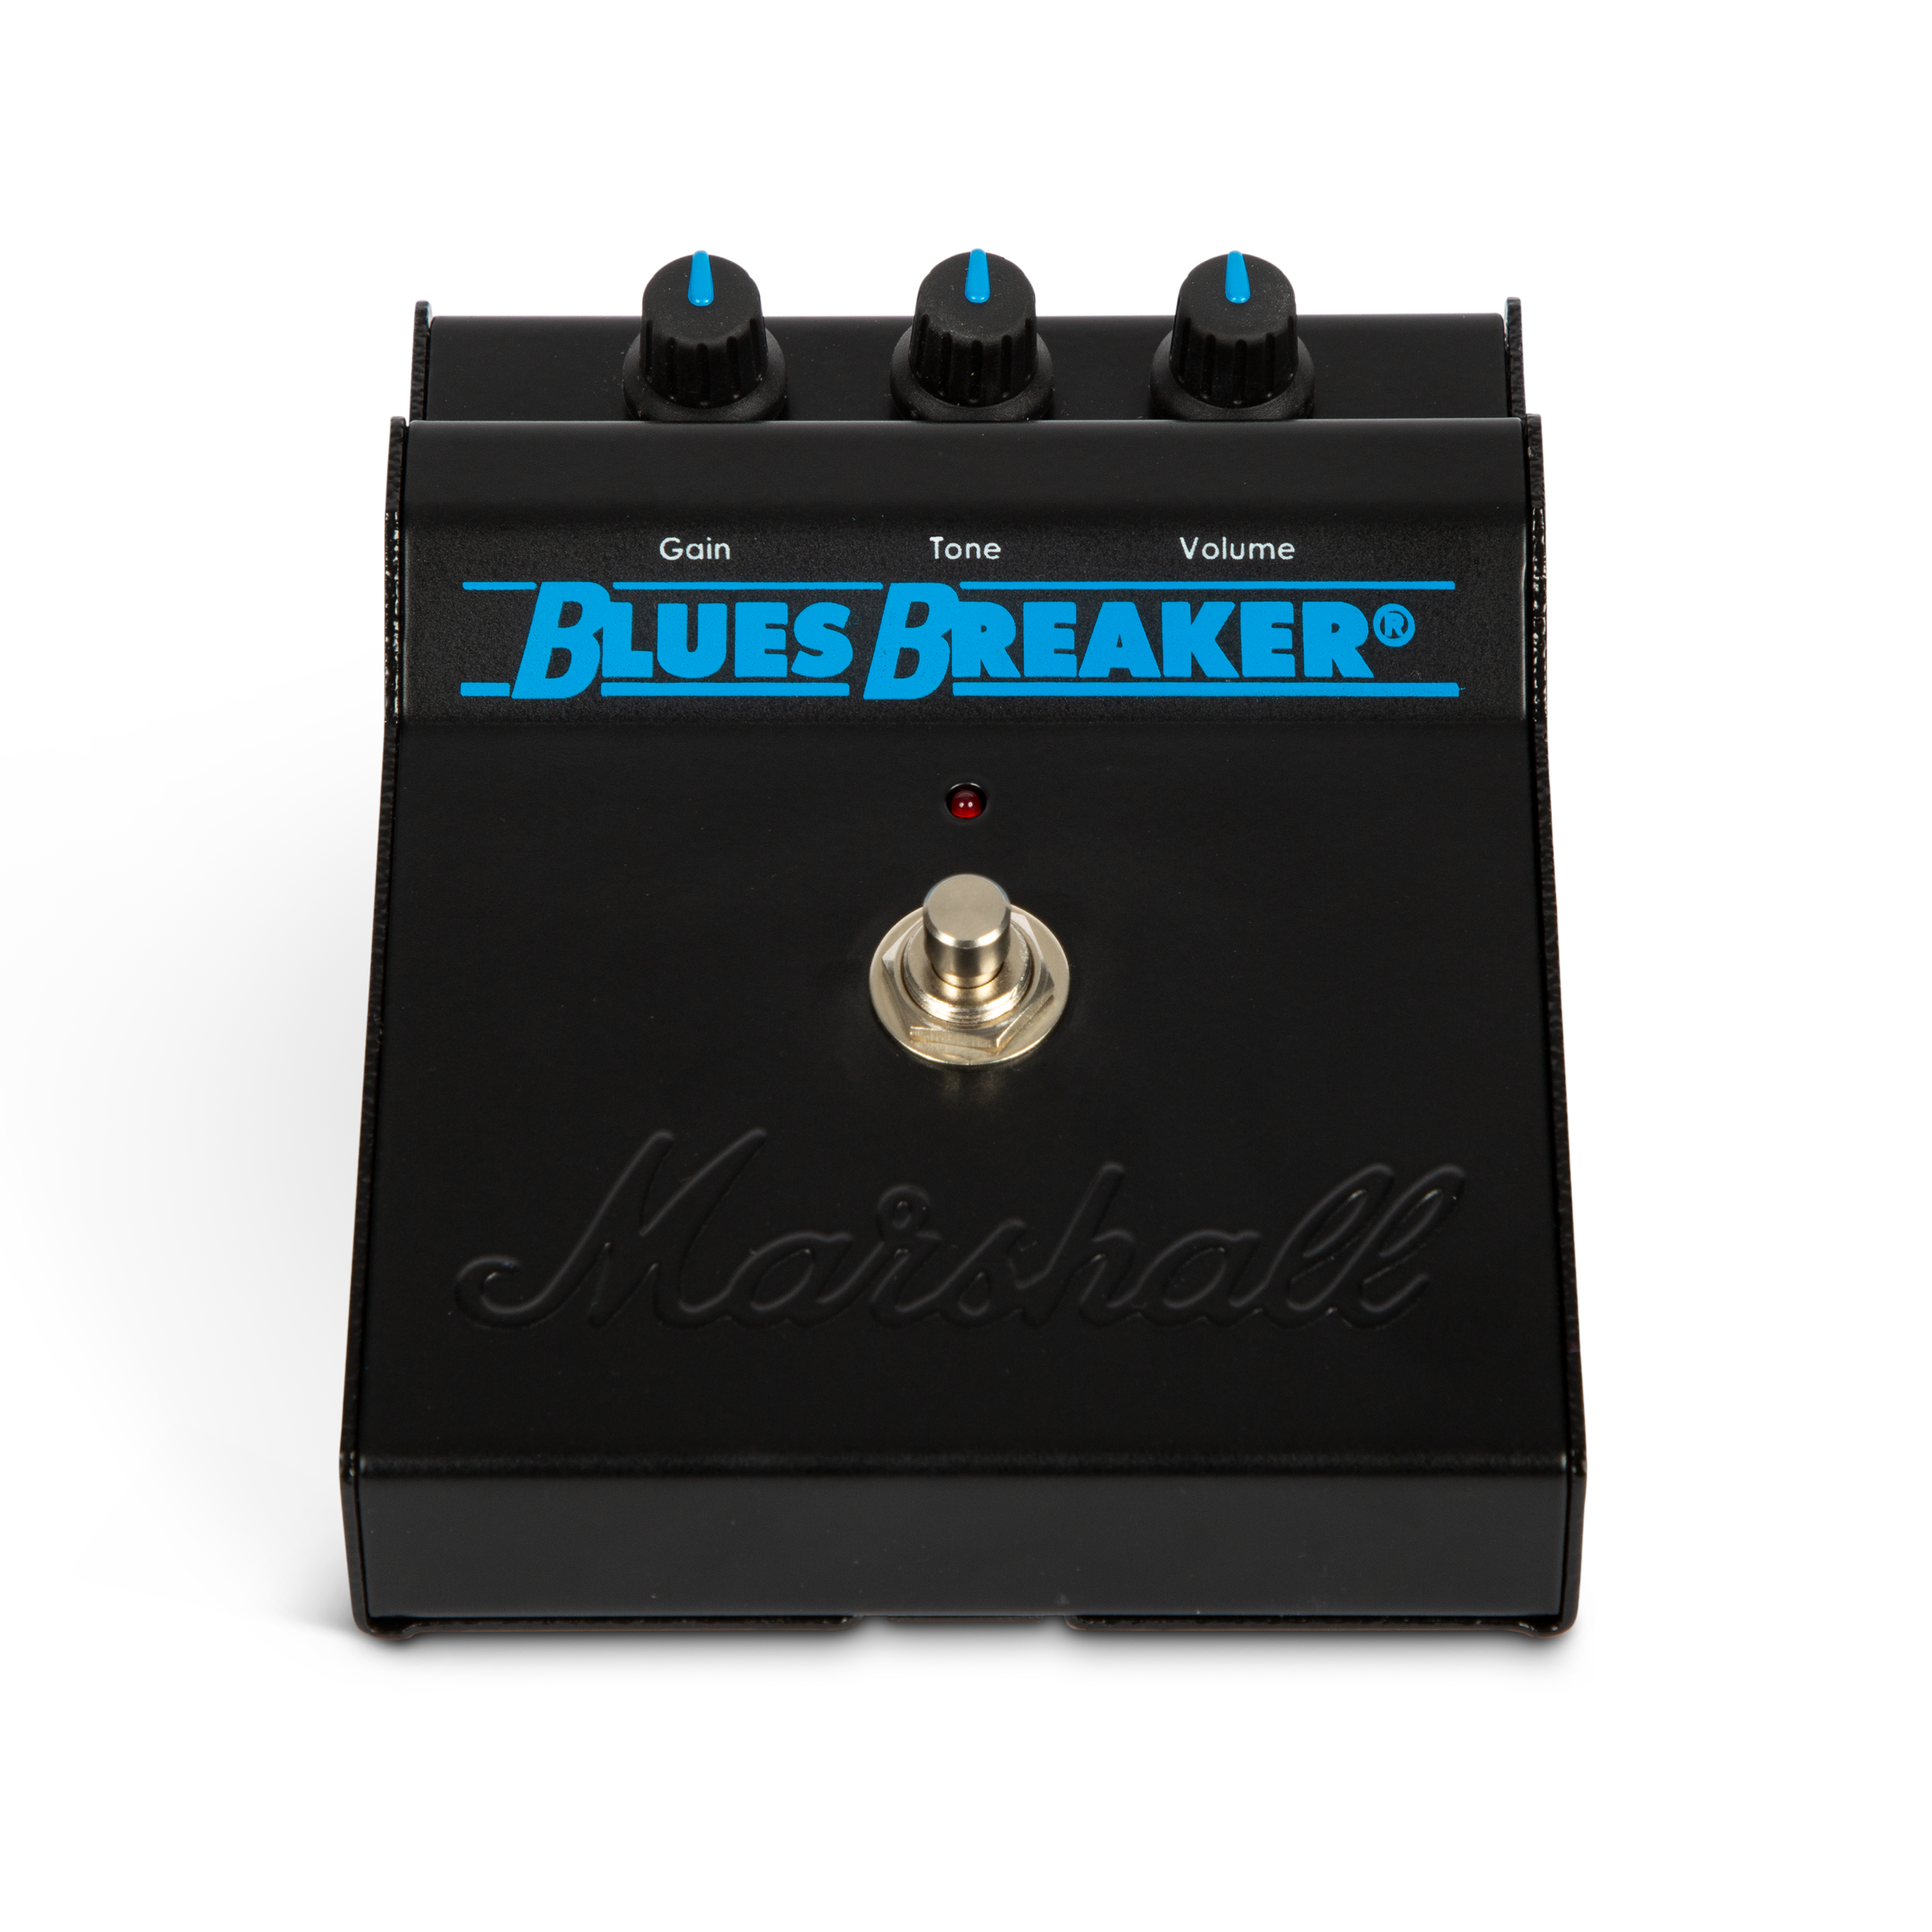 M2010.746_Bluesbreaker pedal_01.png